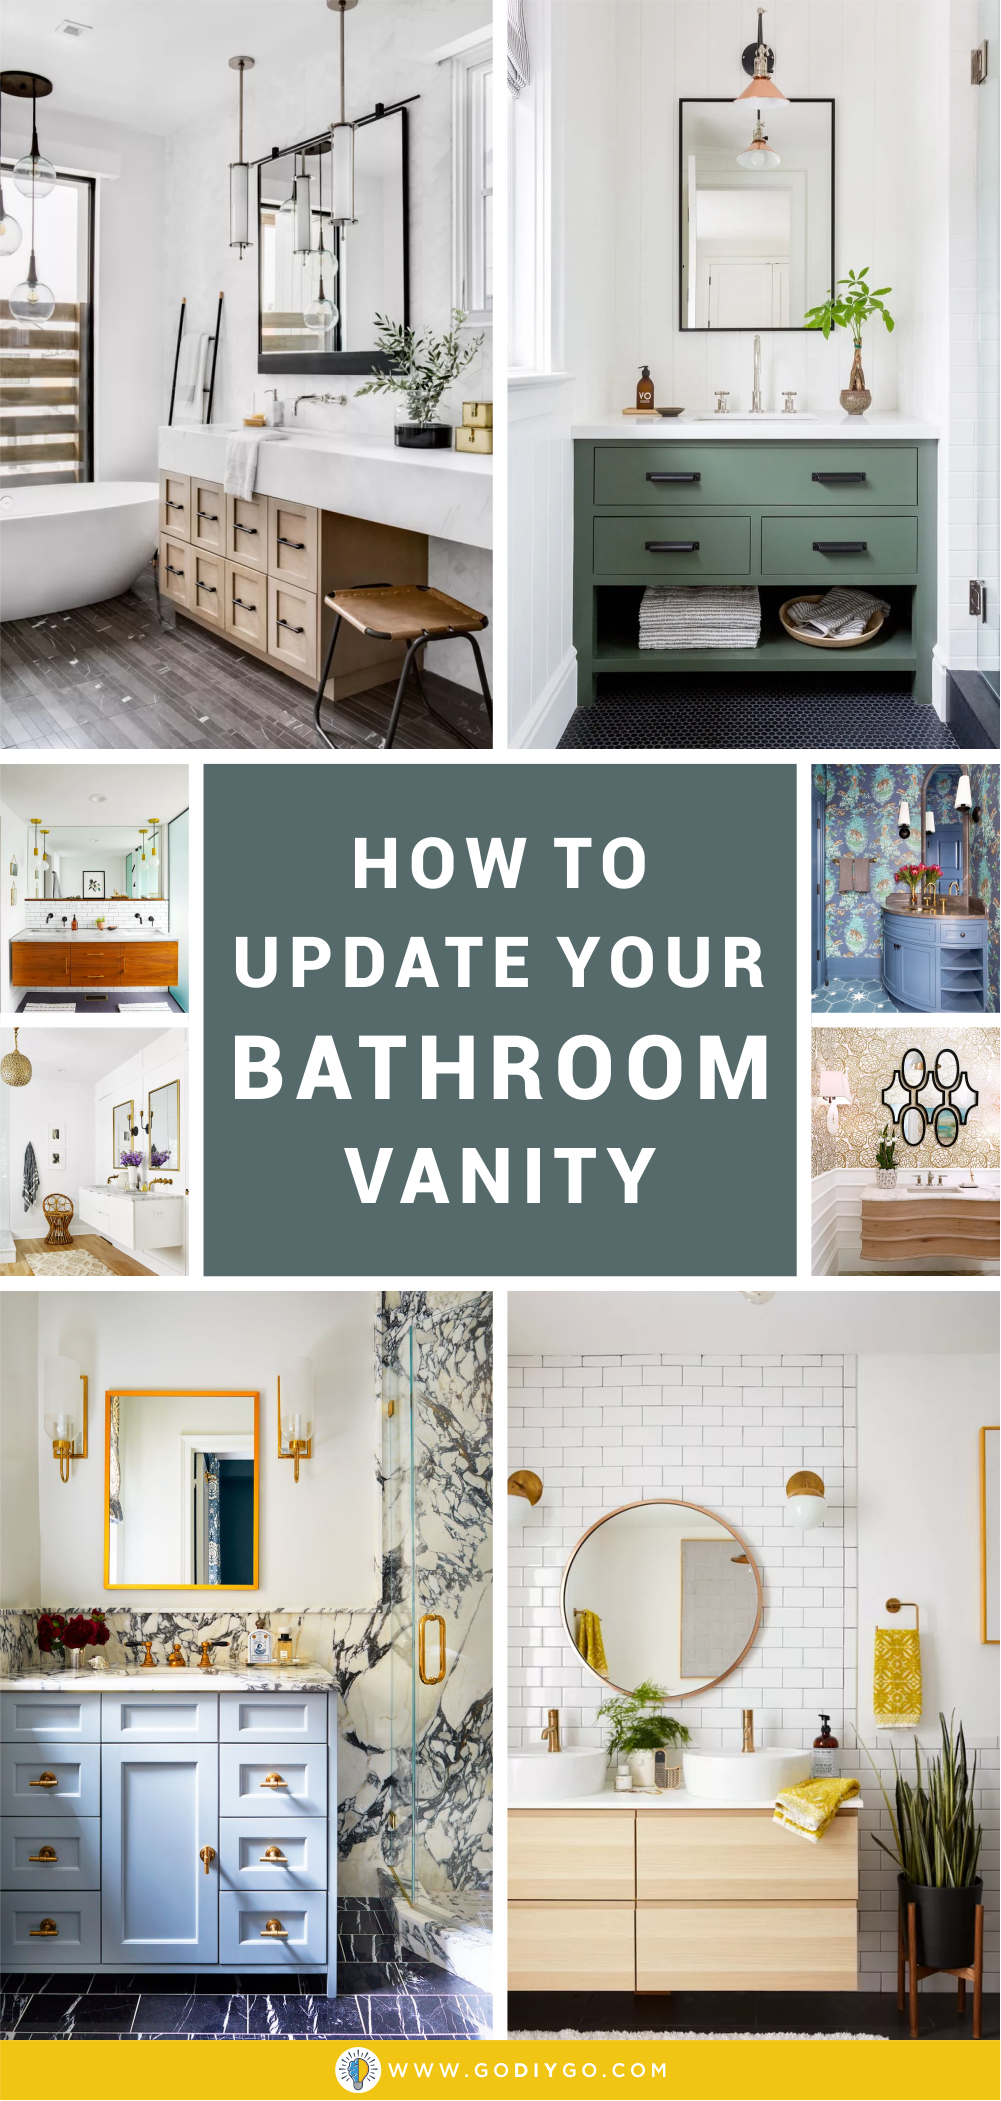 How to Update Your Bathroom Vanity - GODIYGO.COM